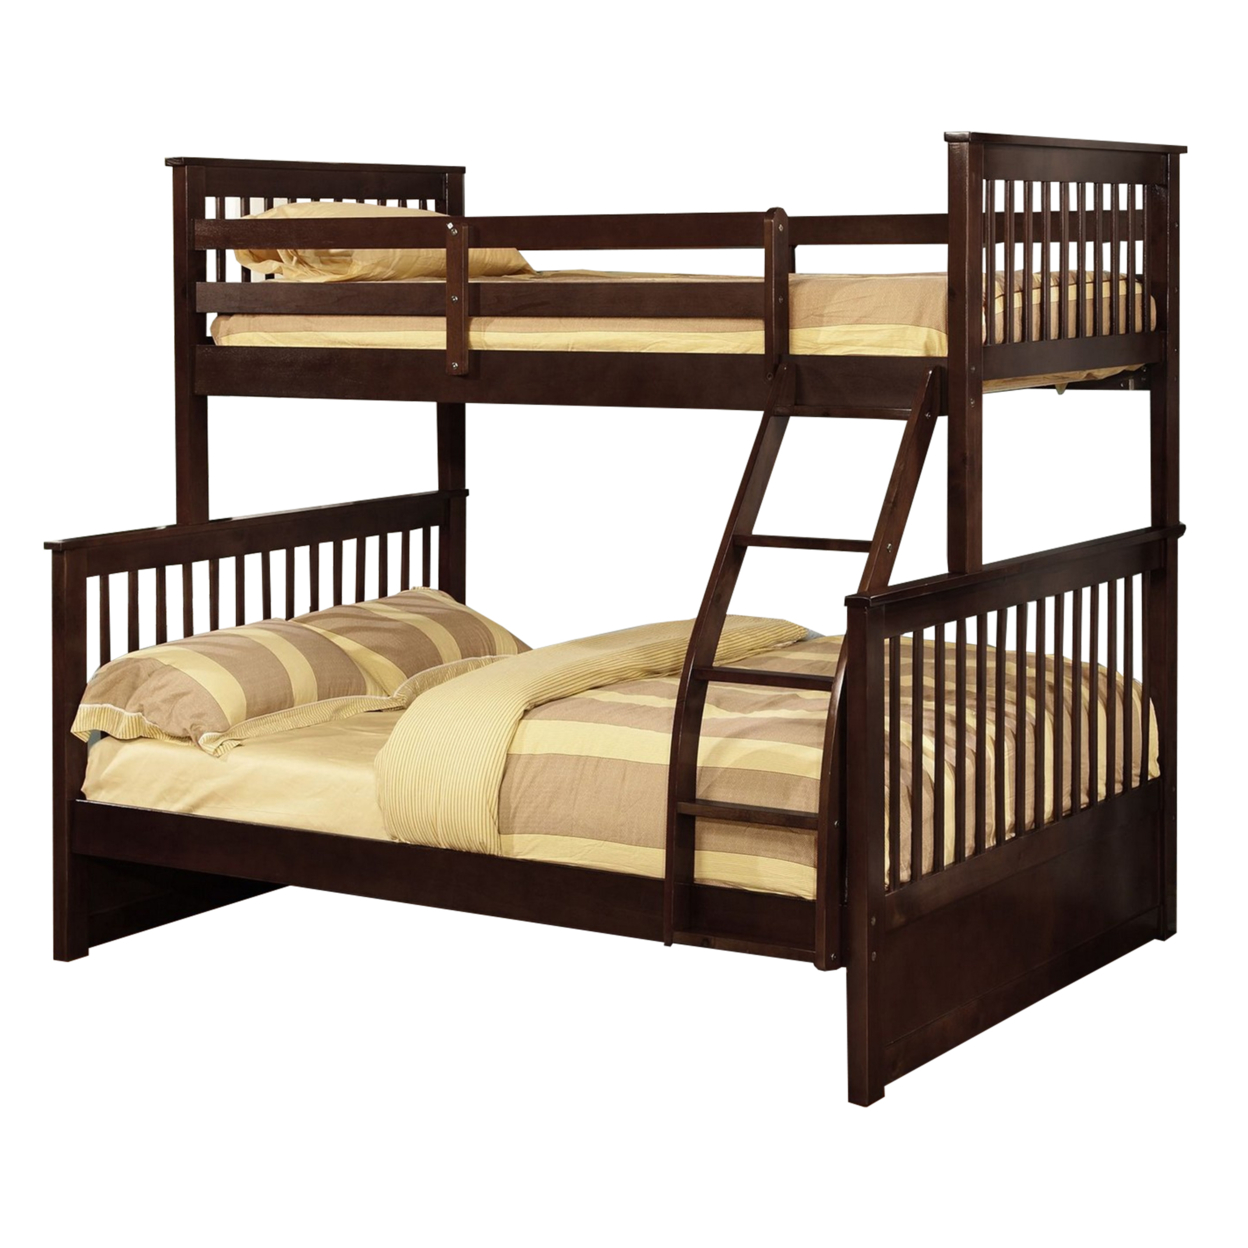 Wooden Twin Over Full Bunk Bed With Slatted Headboard, Dark Brown- Saltoro Sherpi